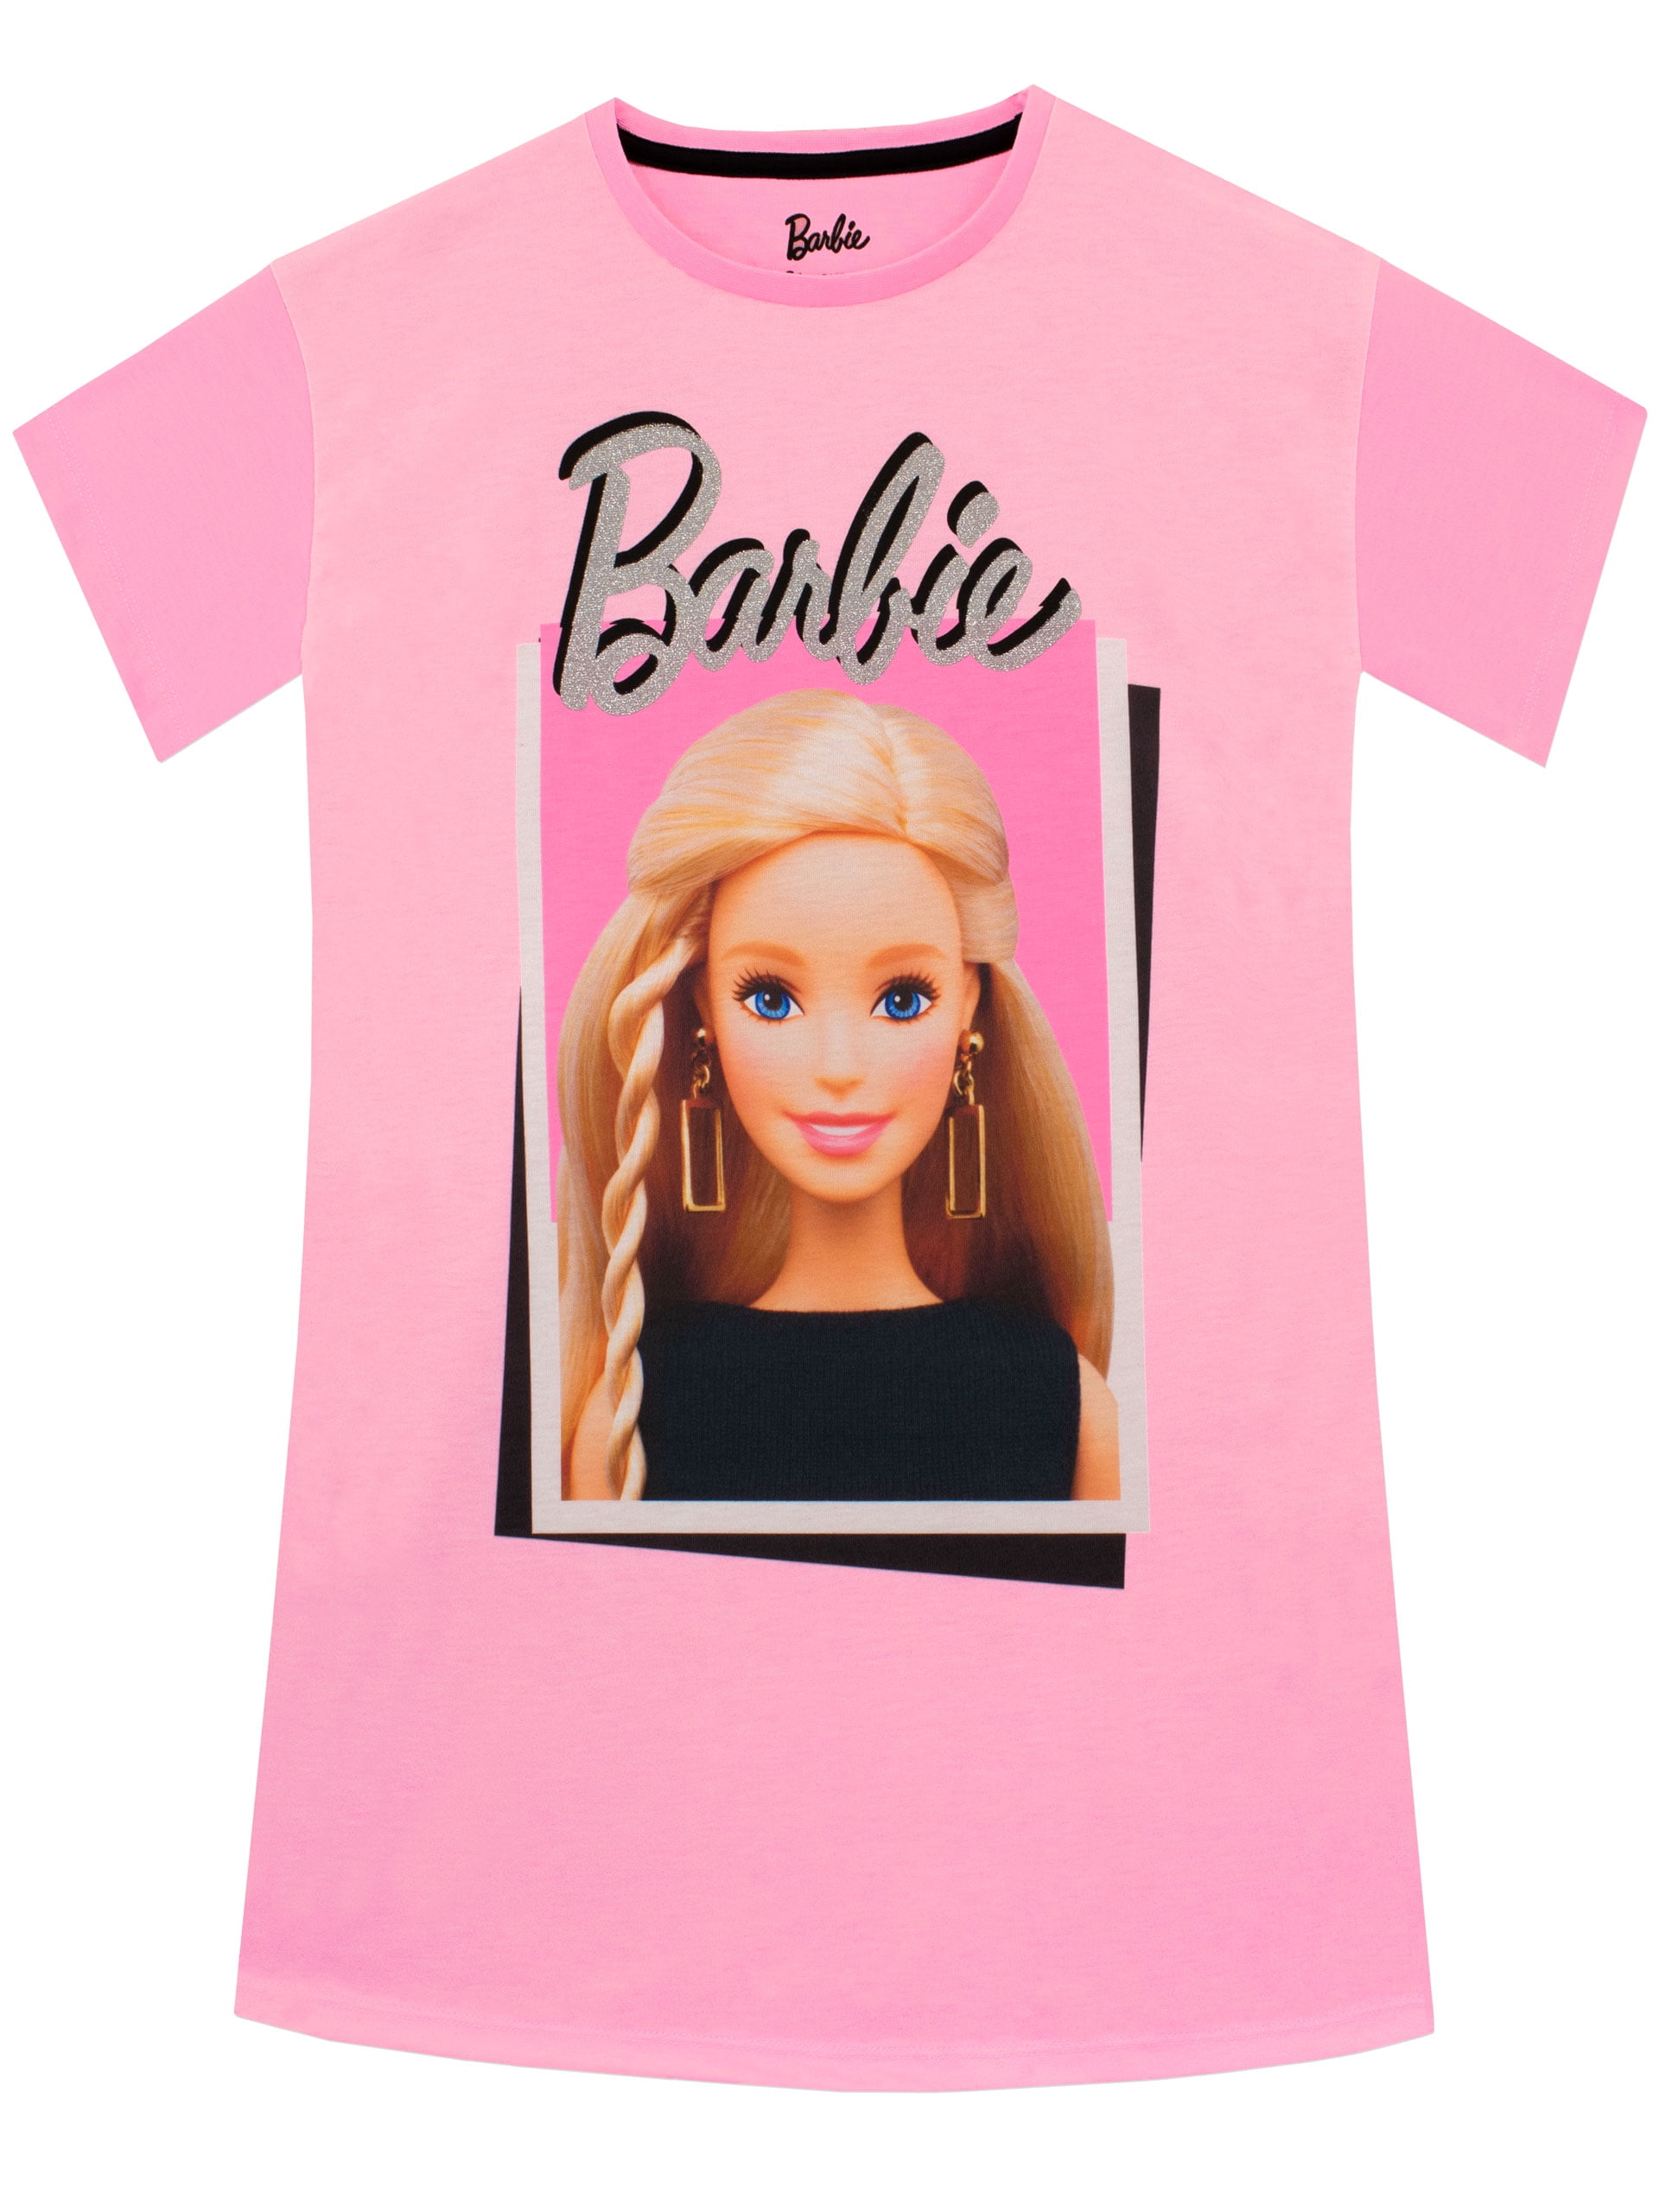 Barbie Girls Nightdress Pink Sizes 4-10 - Walmart.com